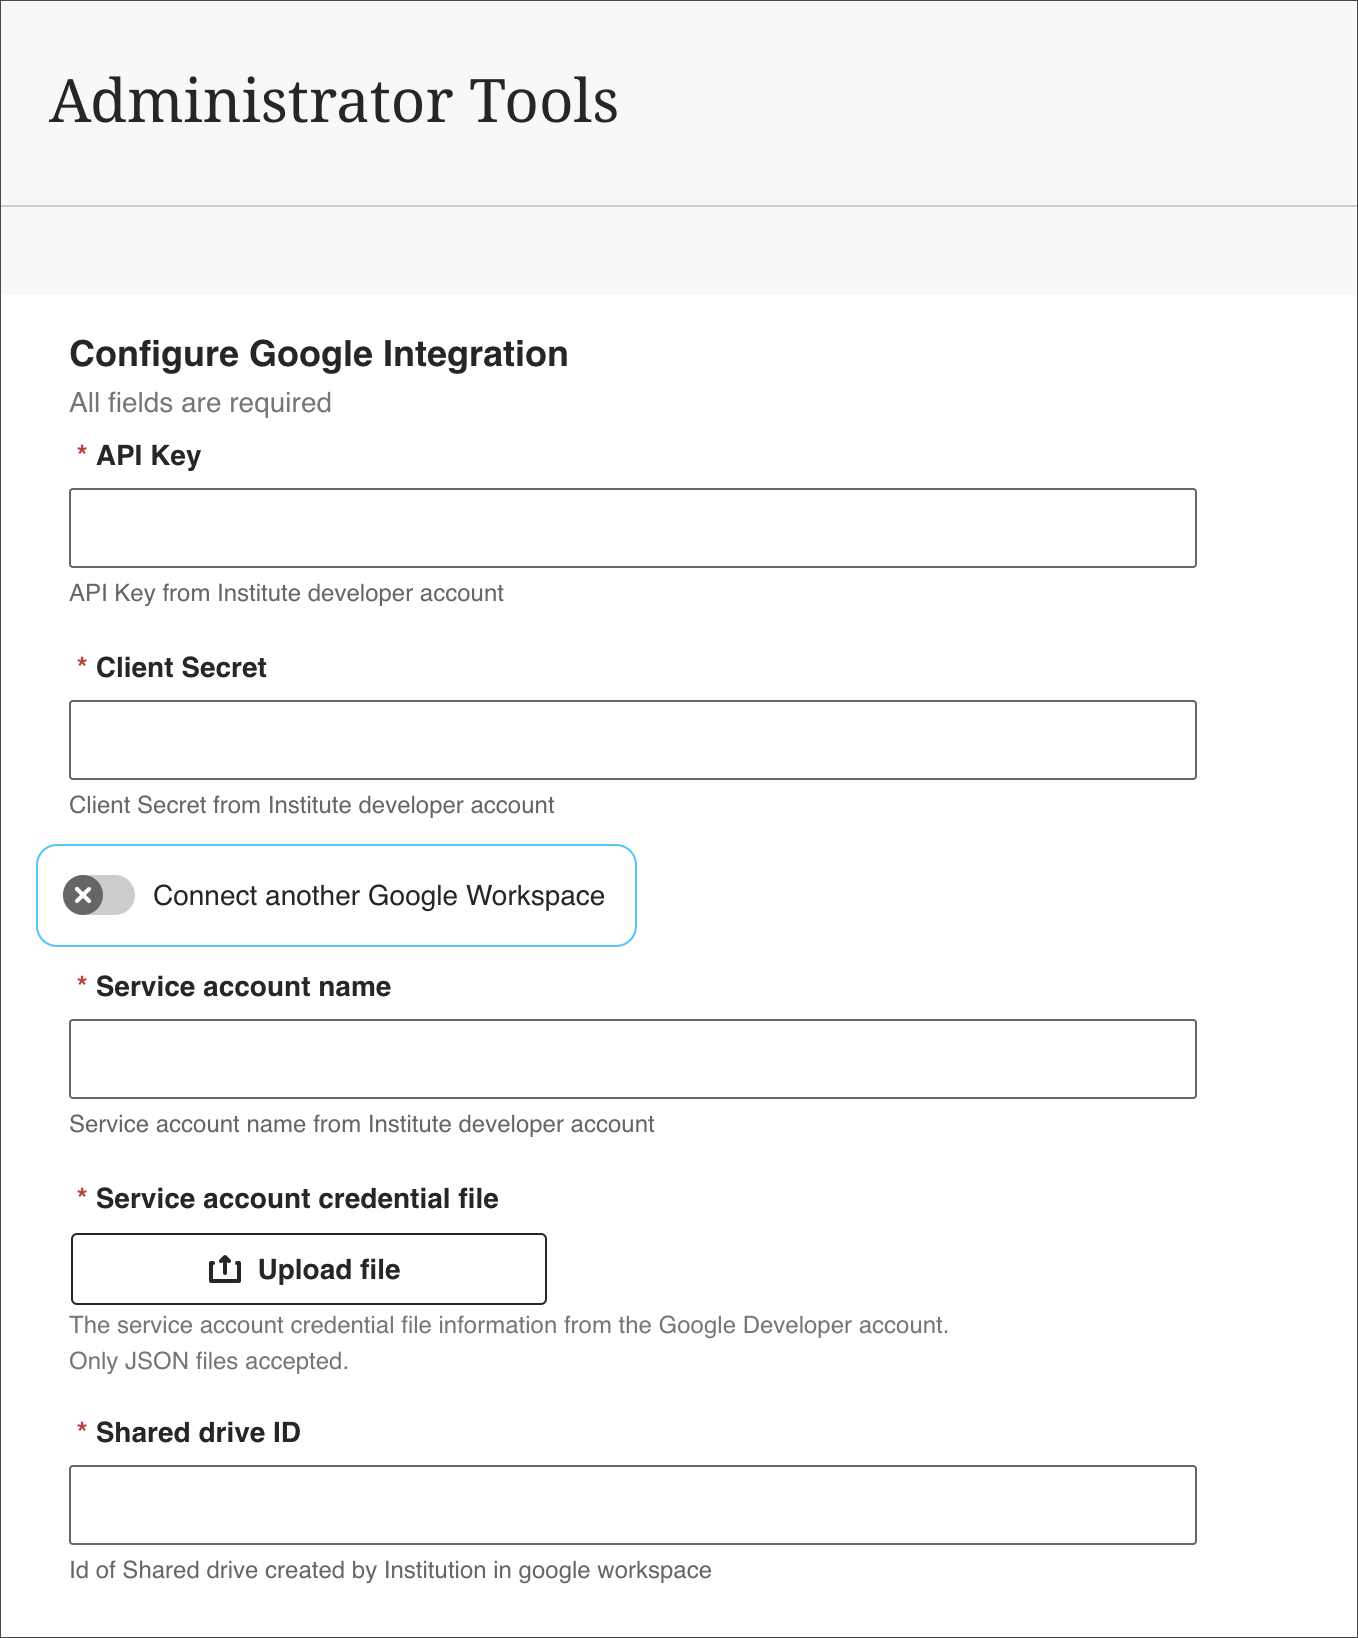 Administrator Tools screen to configure Google integration